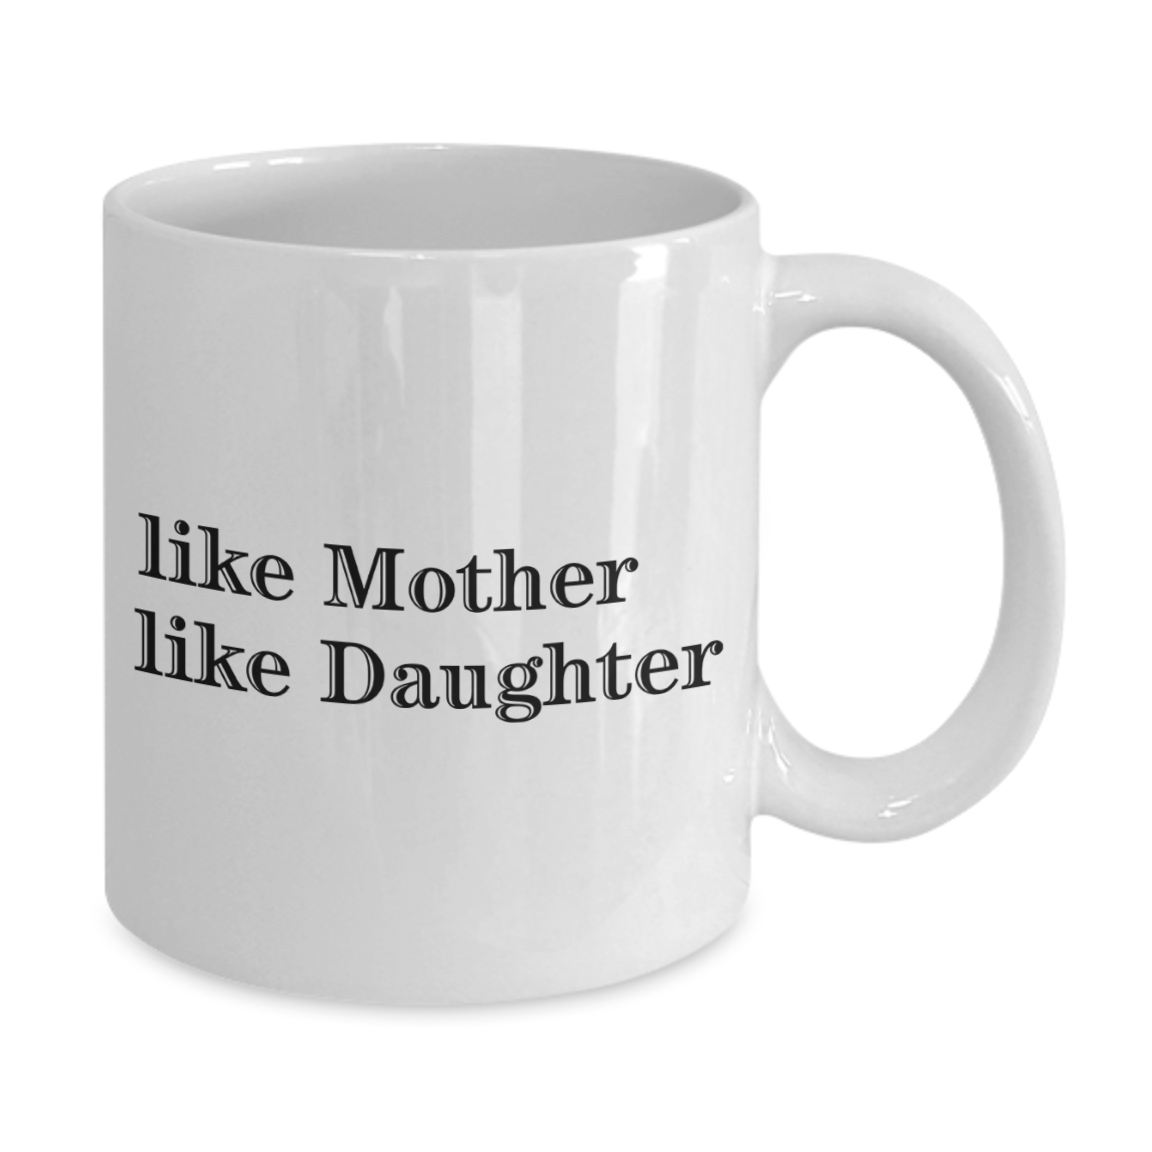 Like Mother Like Daughter - Family Quotes Coffee Mug